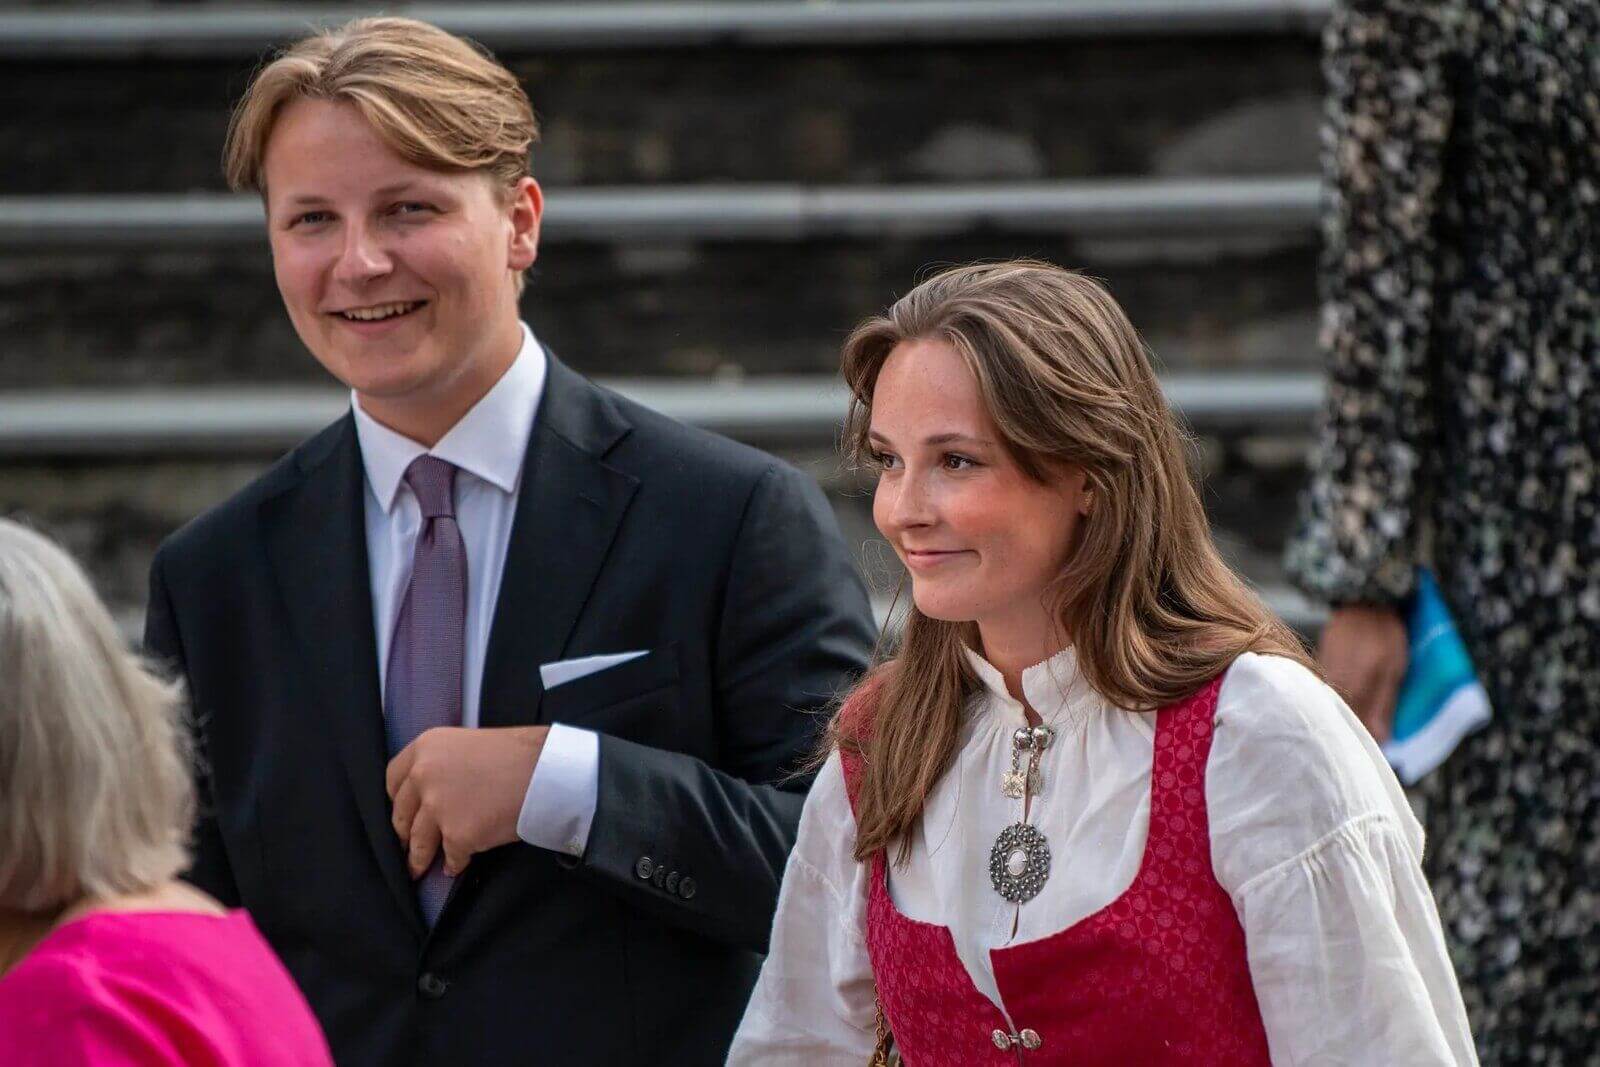 Norwegian Princess Ingrid Alexandra graduated from high school